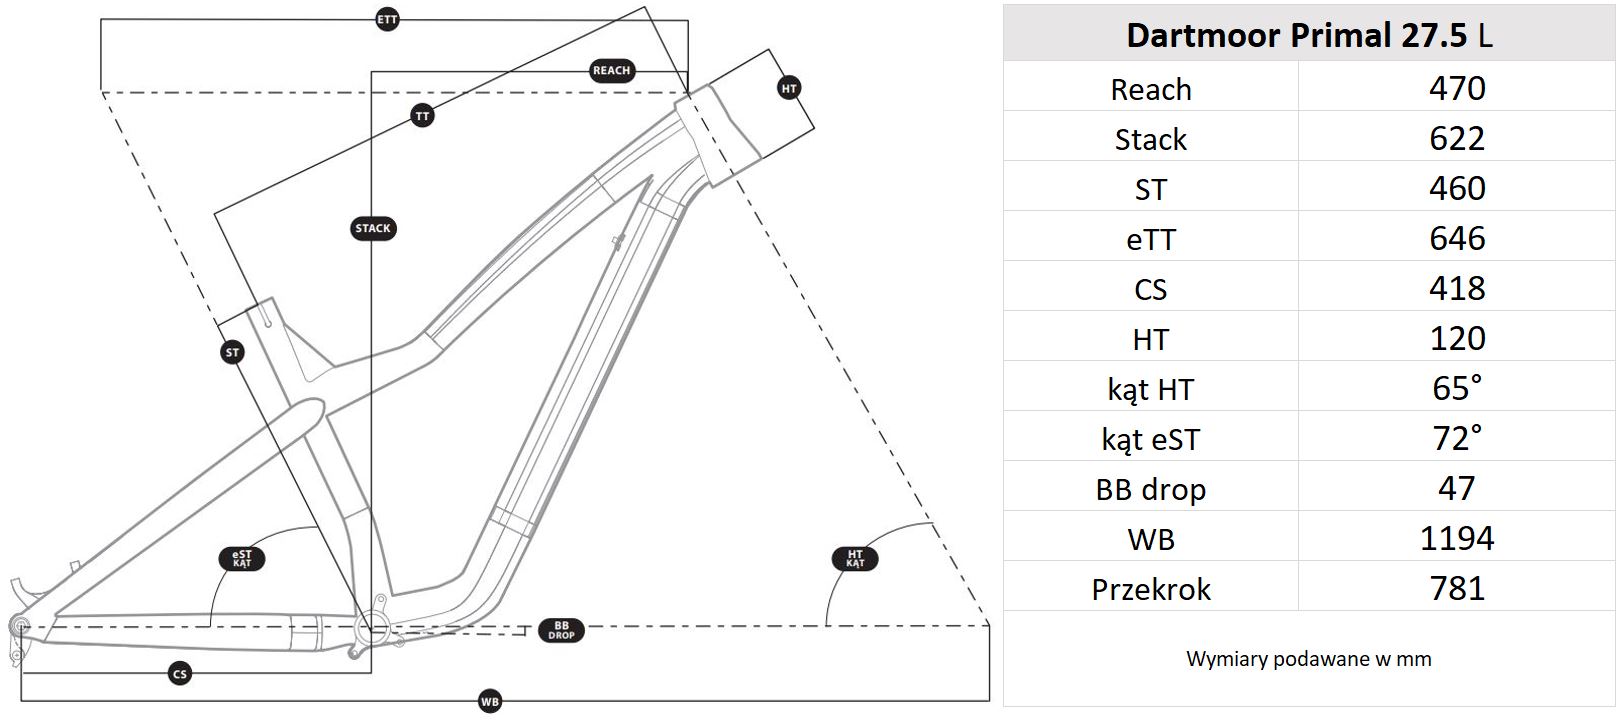 Geometria ramy Dartmoor Primal Intro 27.5 L